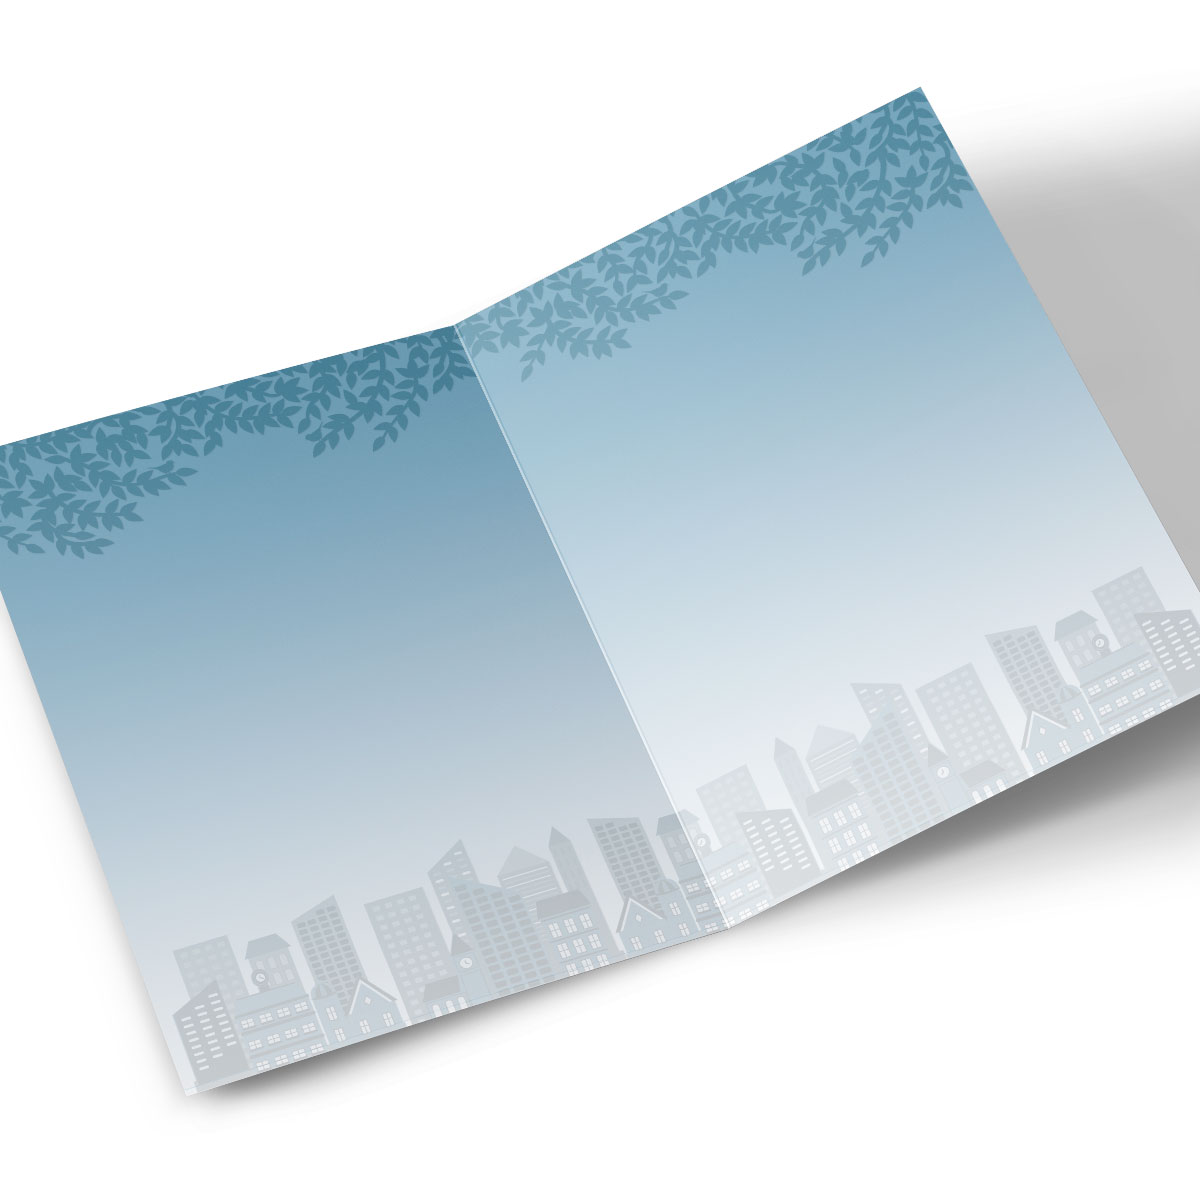 Personalised Anniversary Card - Bridge Silhouette